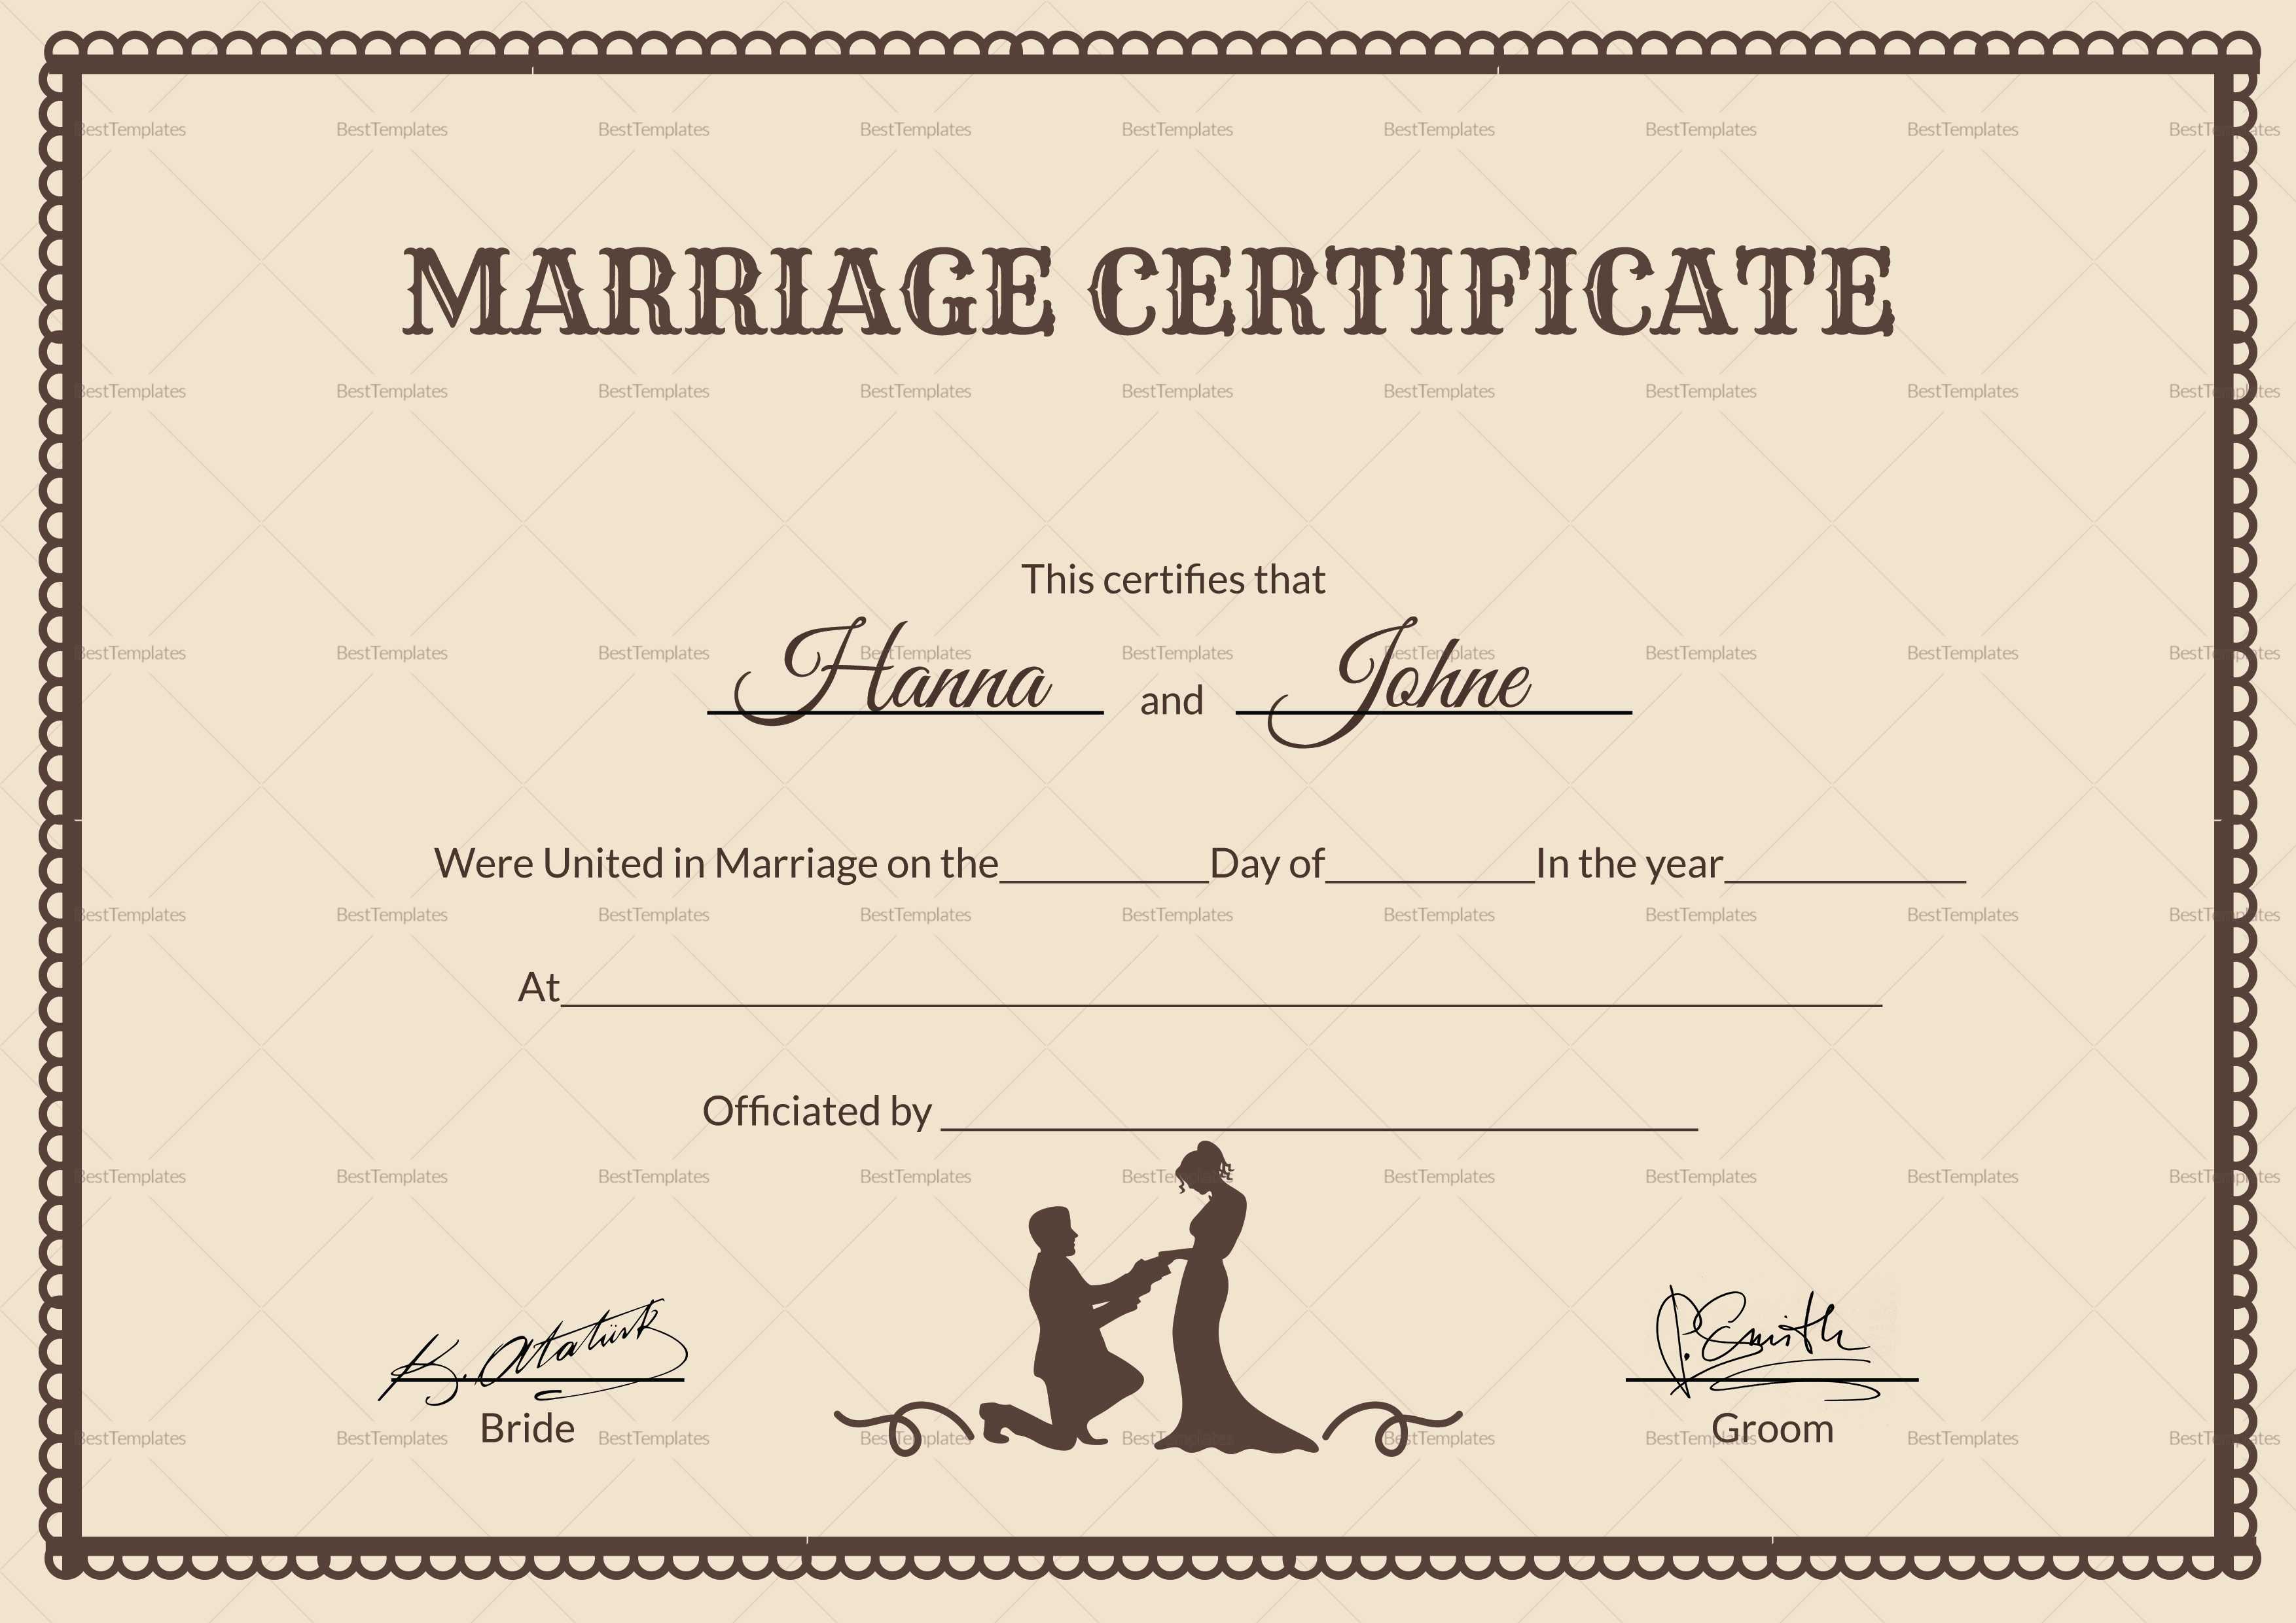 Vintage Marriage Certificate Template Inside Certificate Of Marriage Template